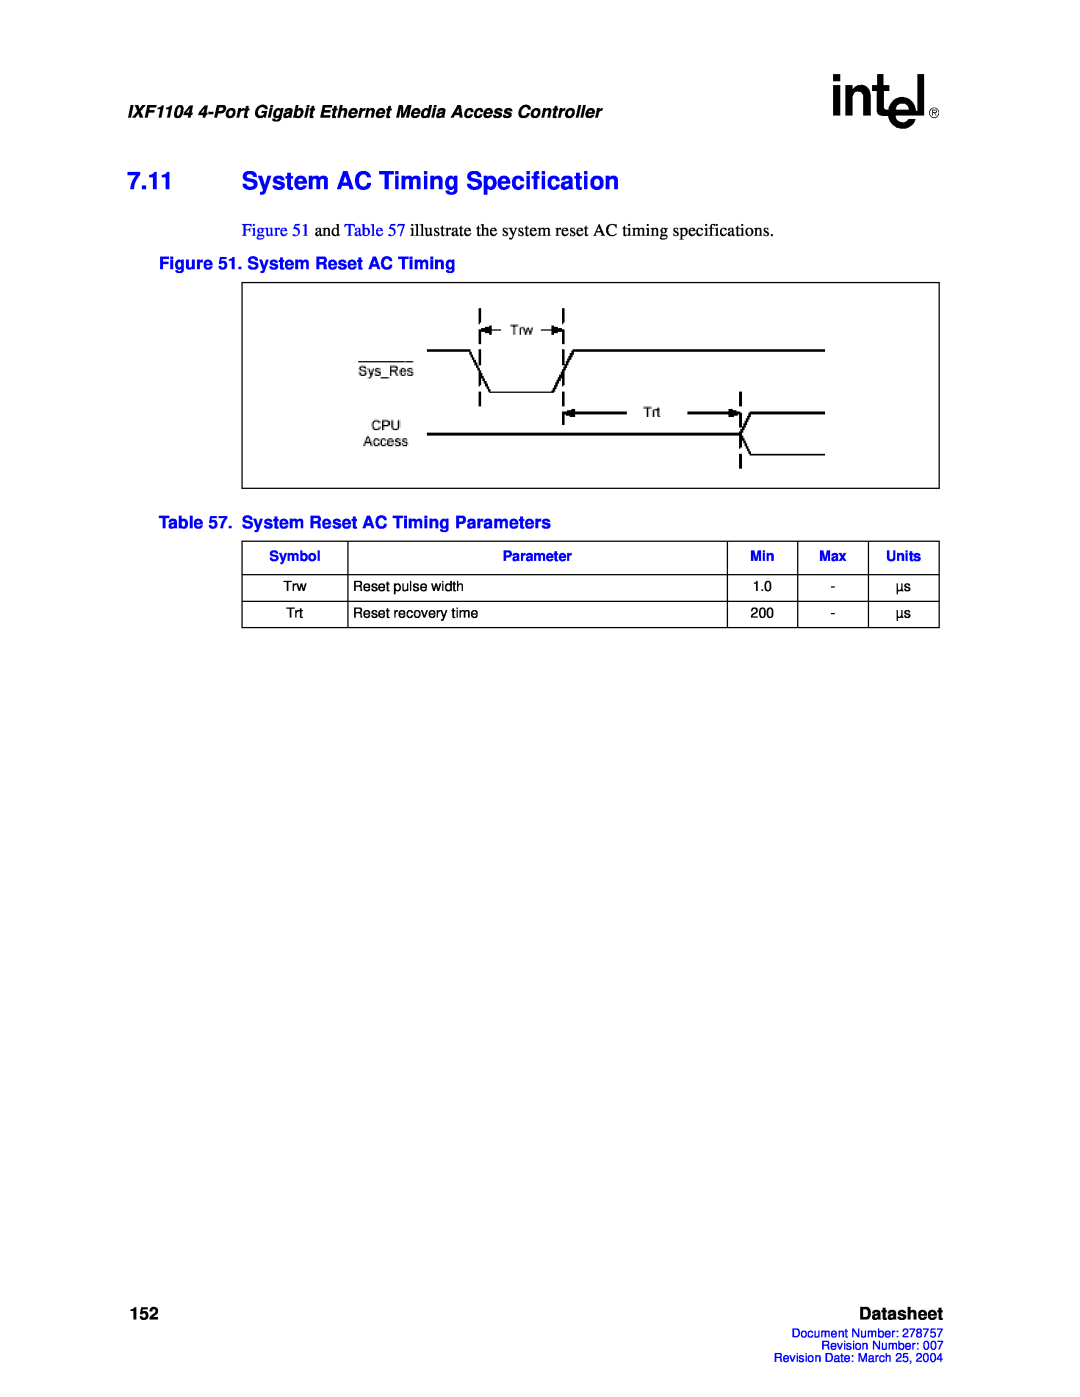 Intel IXF1104 manual 7.11System AC Timing Specification, Datasheet 